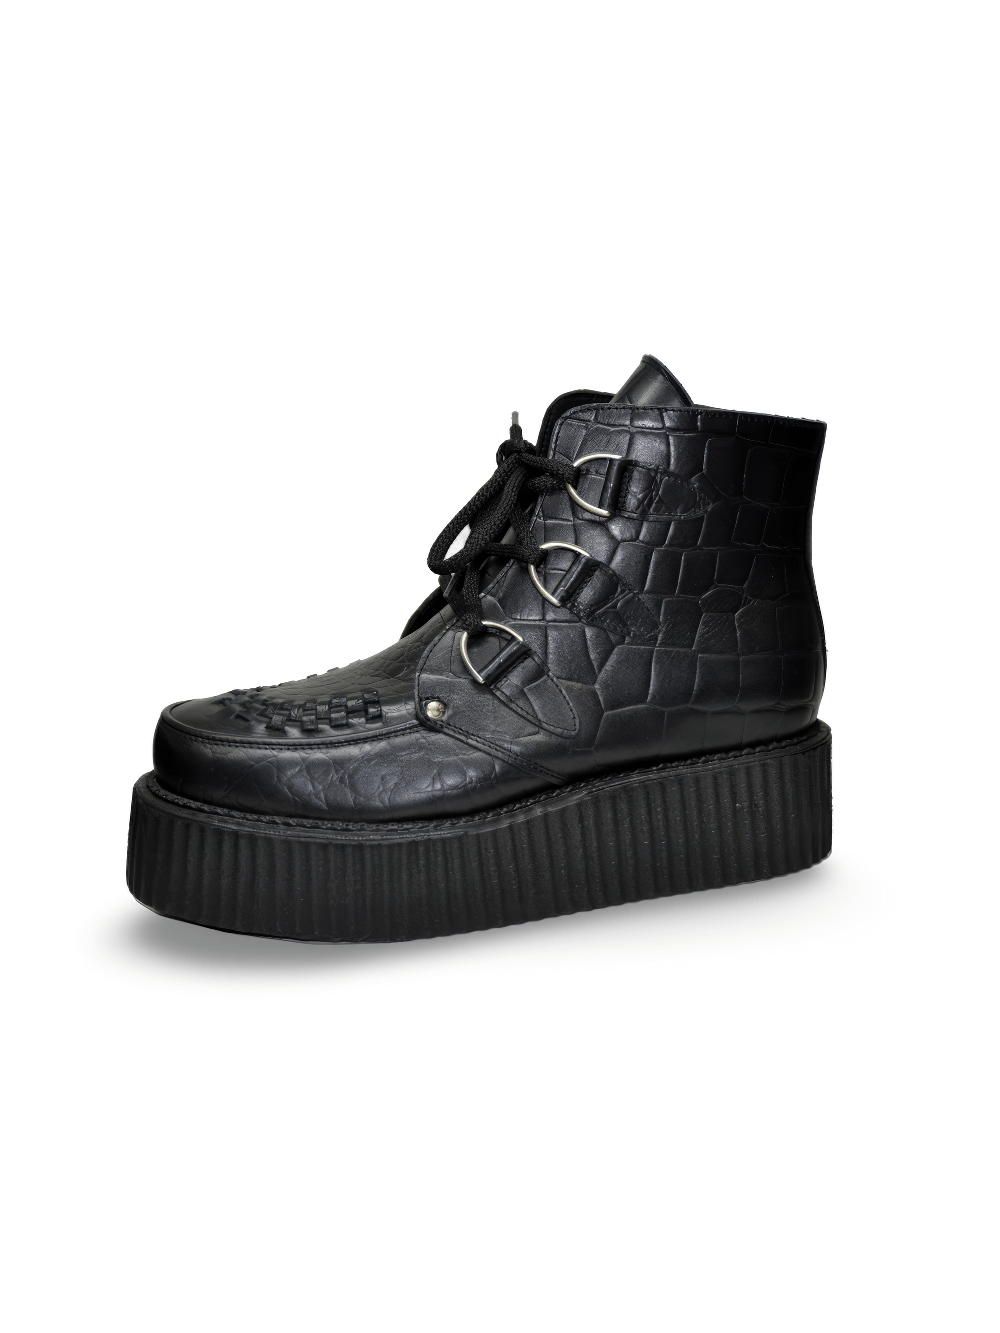 Gothic Style Croco-Textured Unisex Platform Ankle Boots